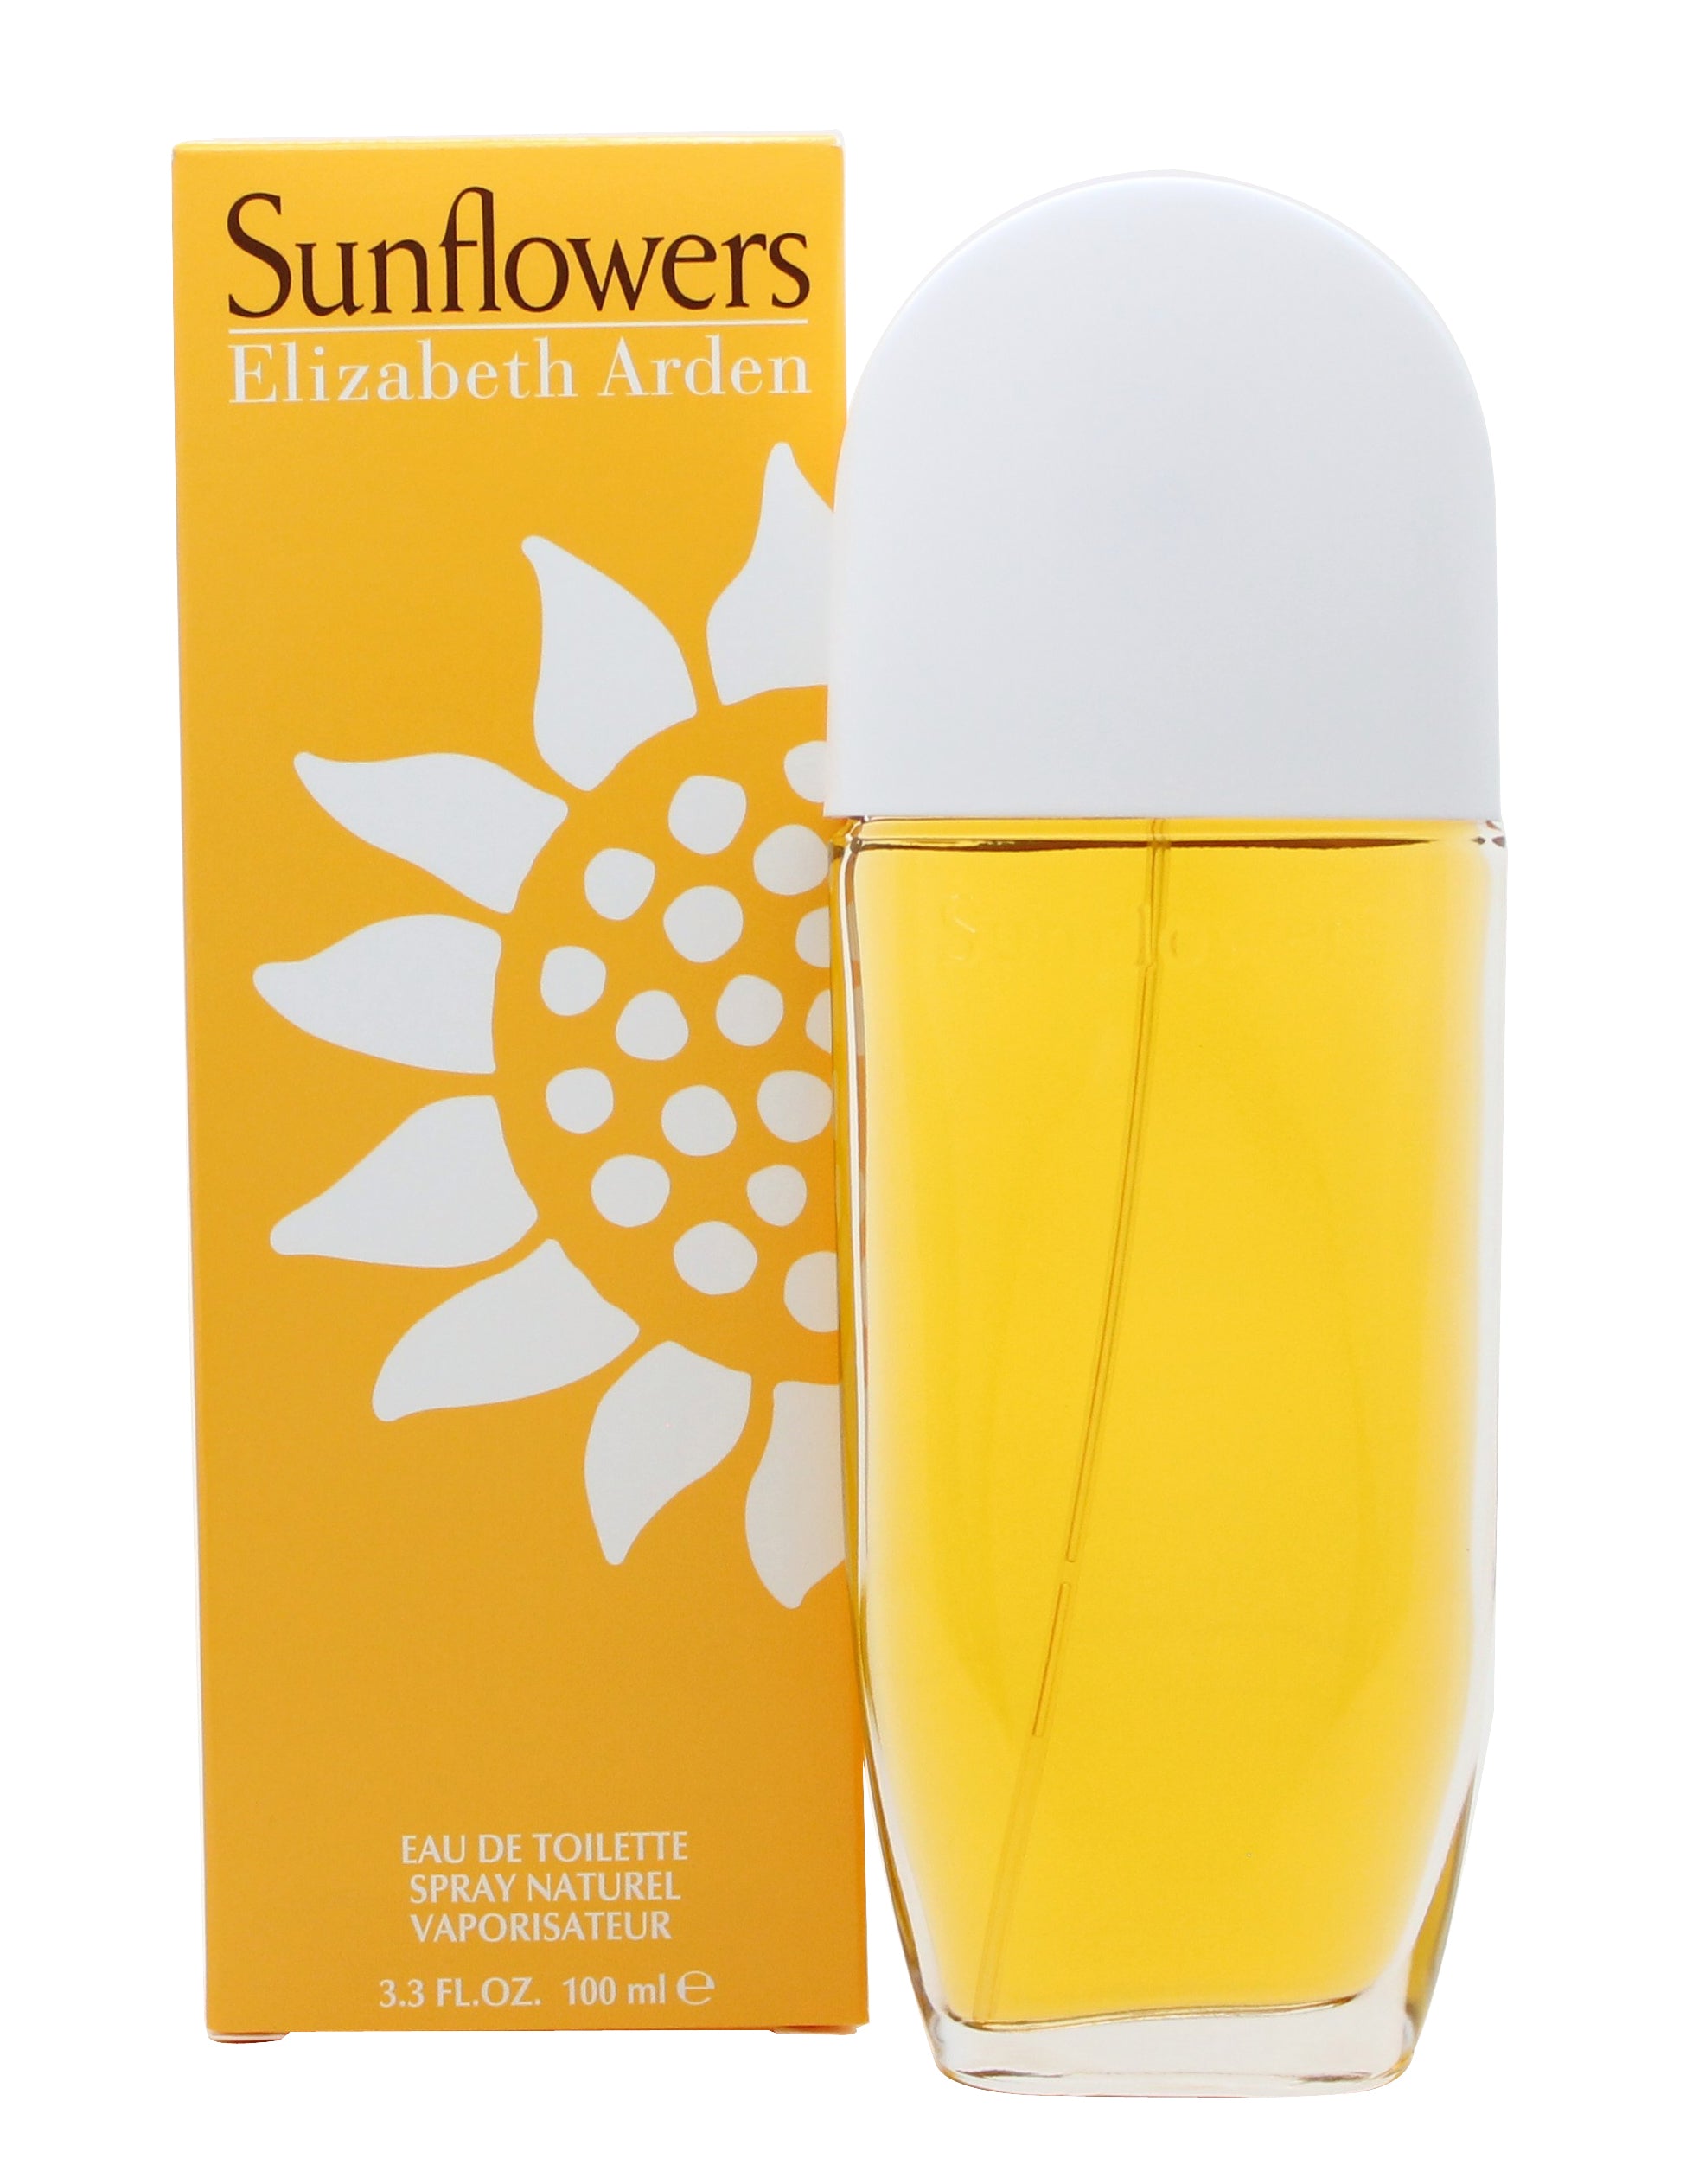 View Elizabeth Arden Sunflowers Eau de Toilette 100ml Spray information